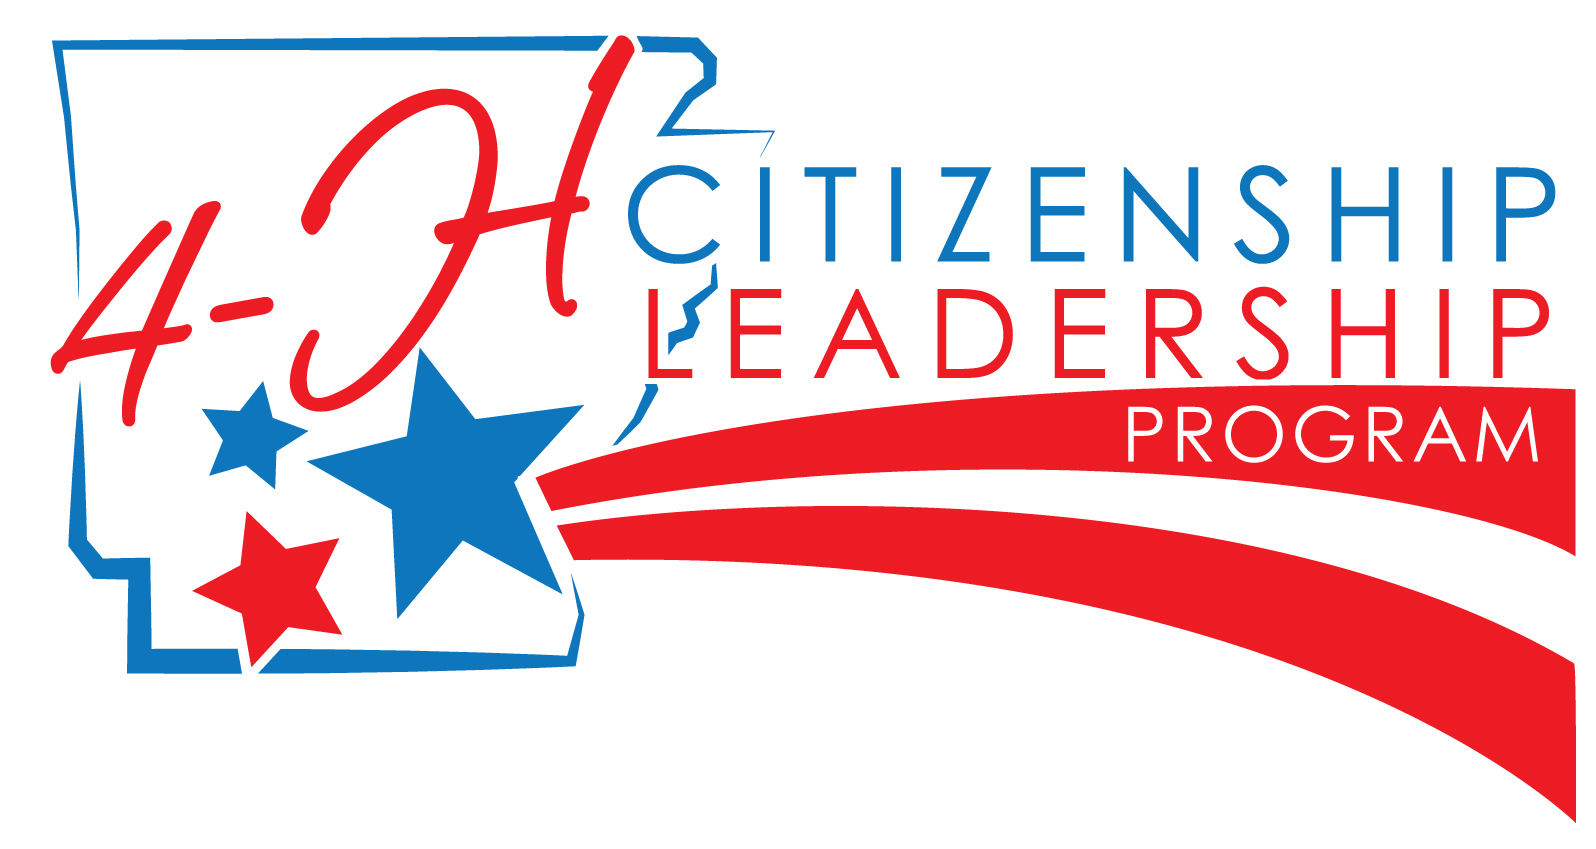 Red and blue 4-H Citizenship, Leadership Program logo